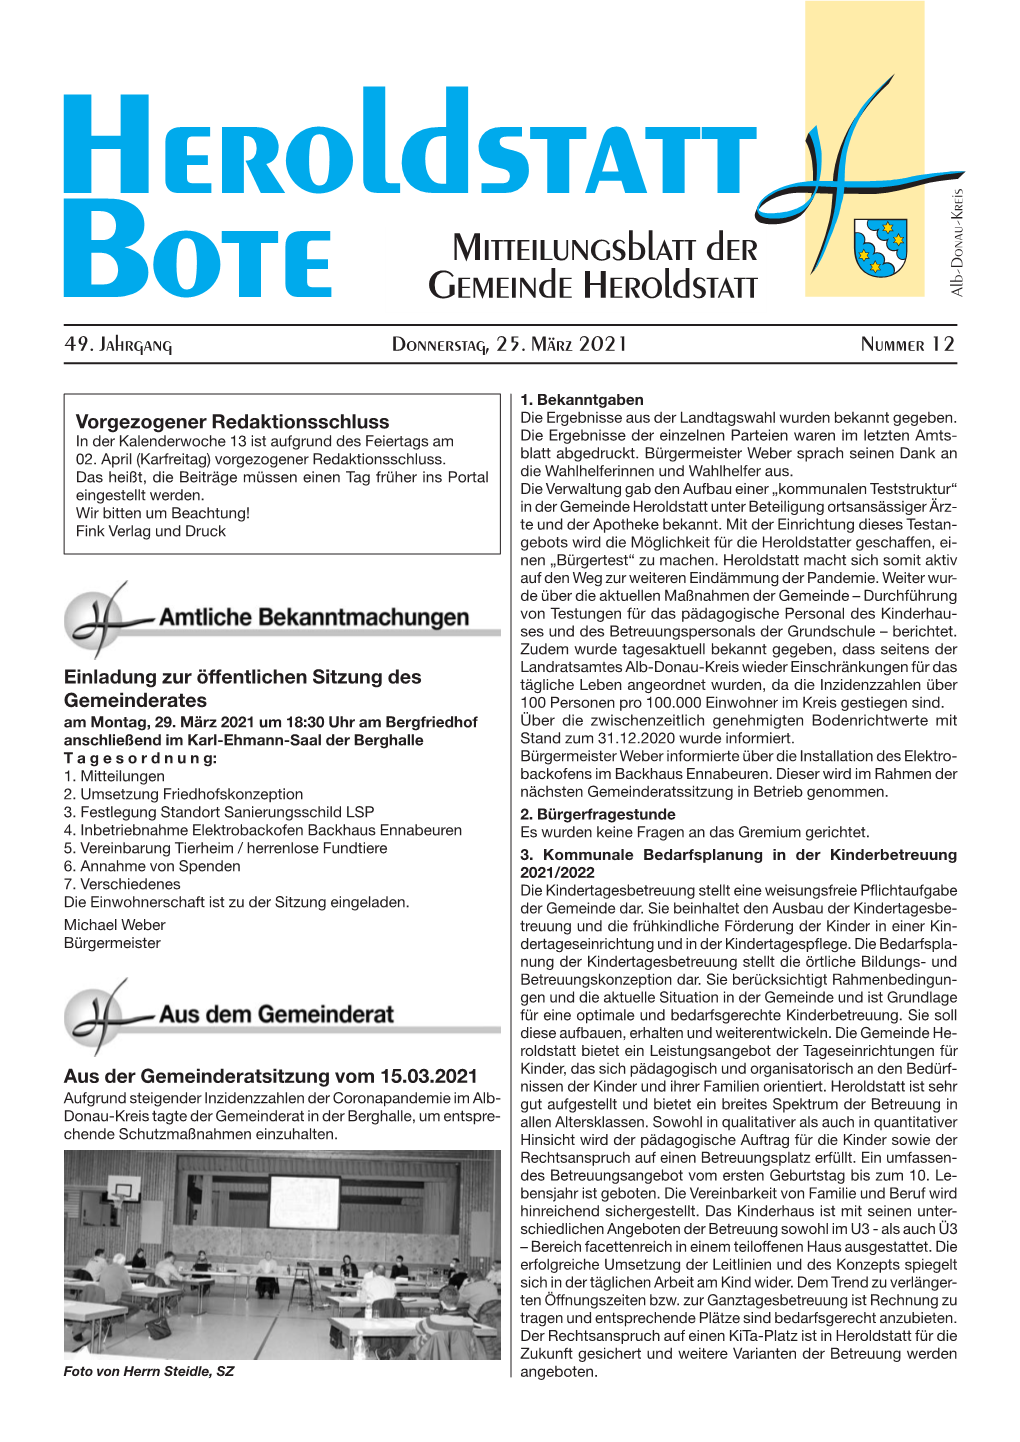 Heroldstatt Bote KW 12/2021 (PDF-Datei)